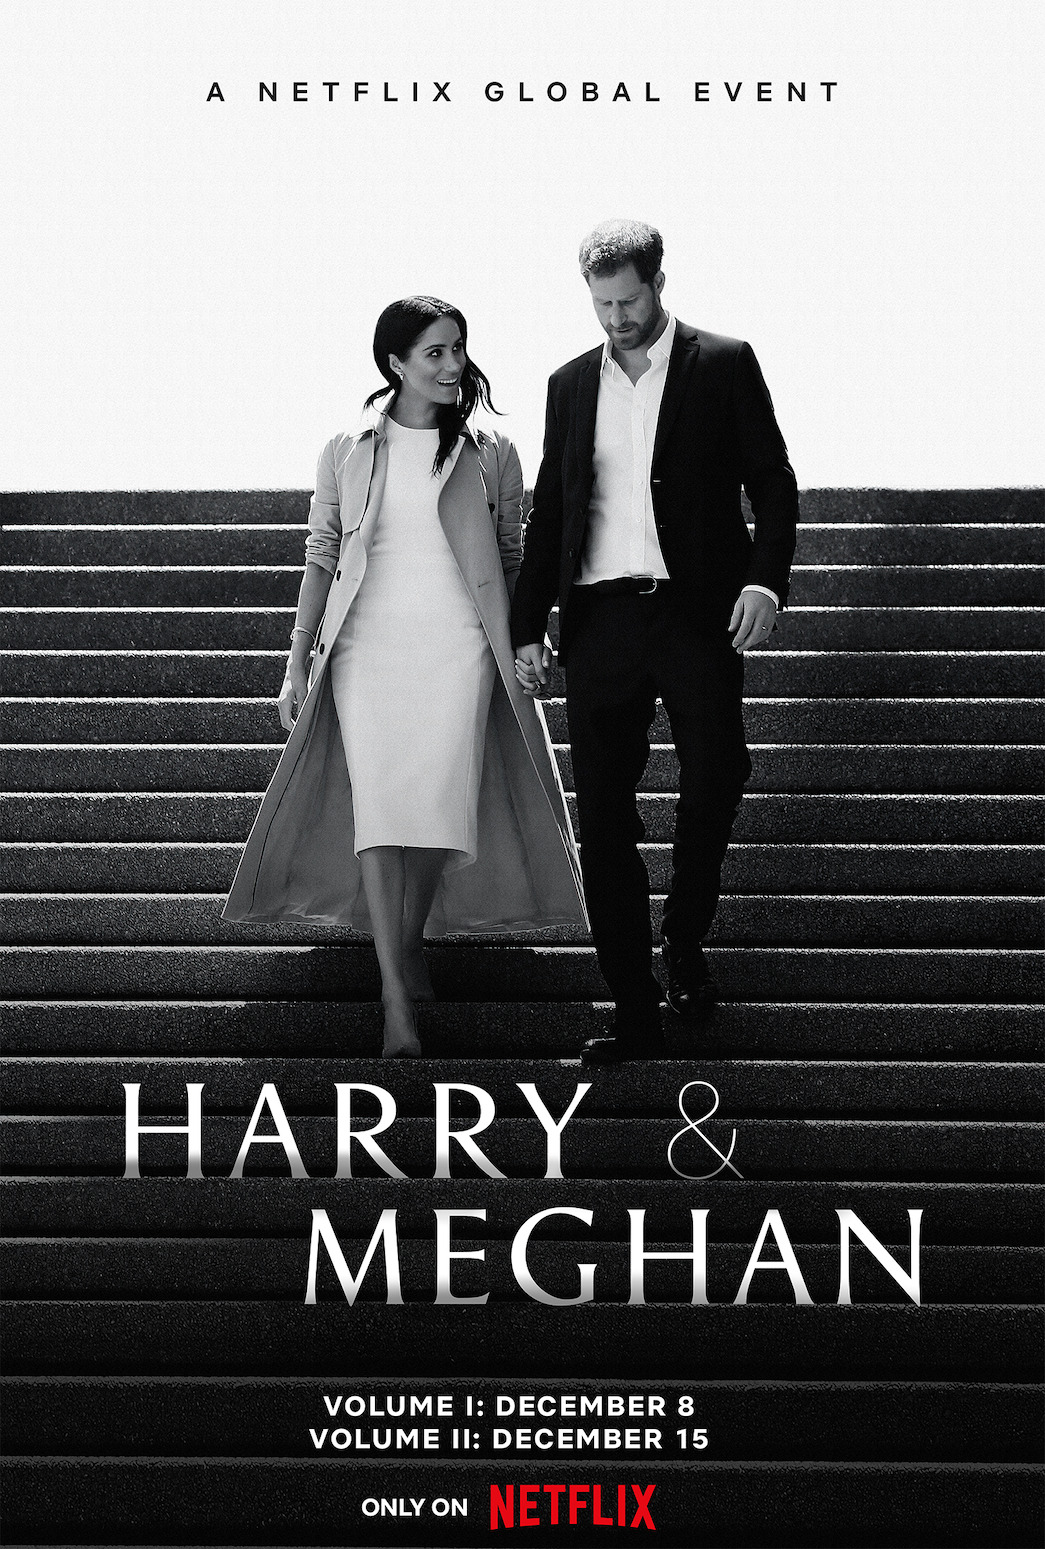 Harry & Meghan Documentary Part 2, Release Date and Photos - Netflix Tudum